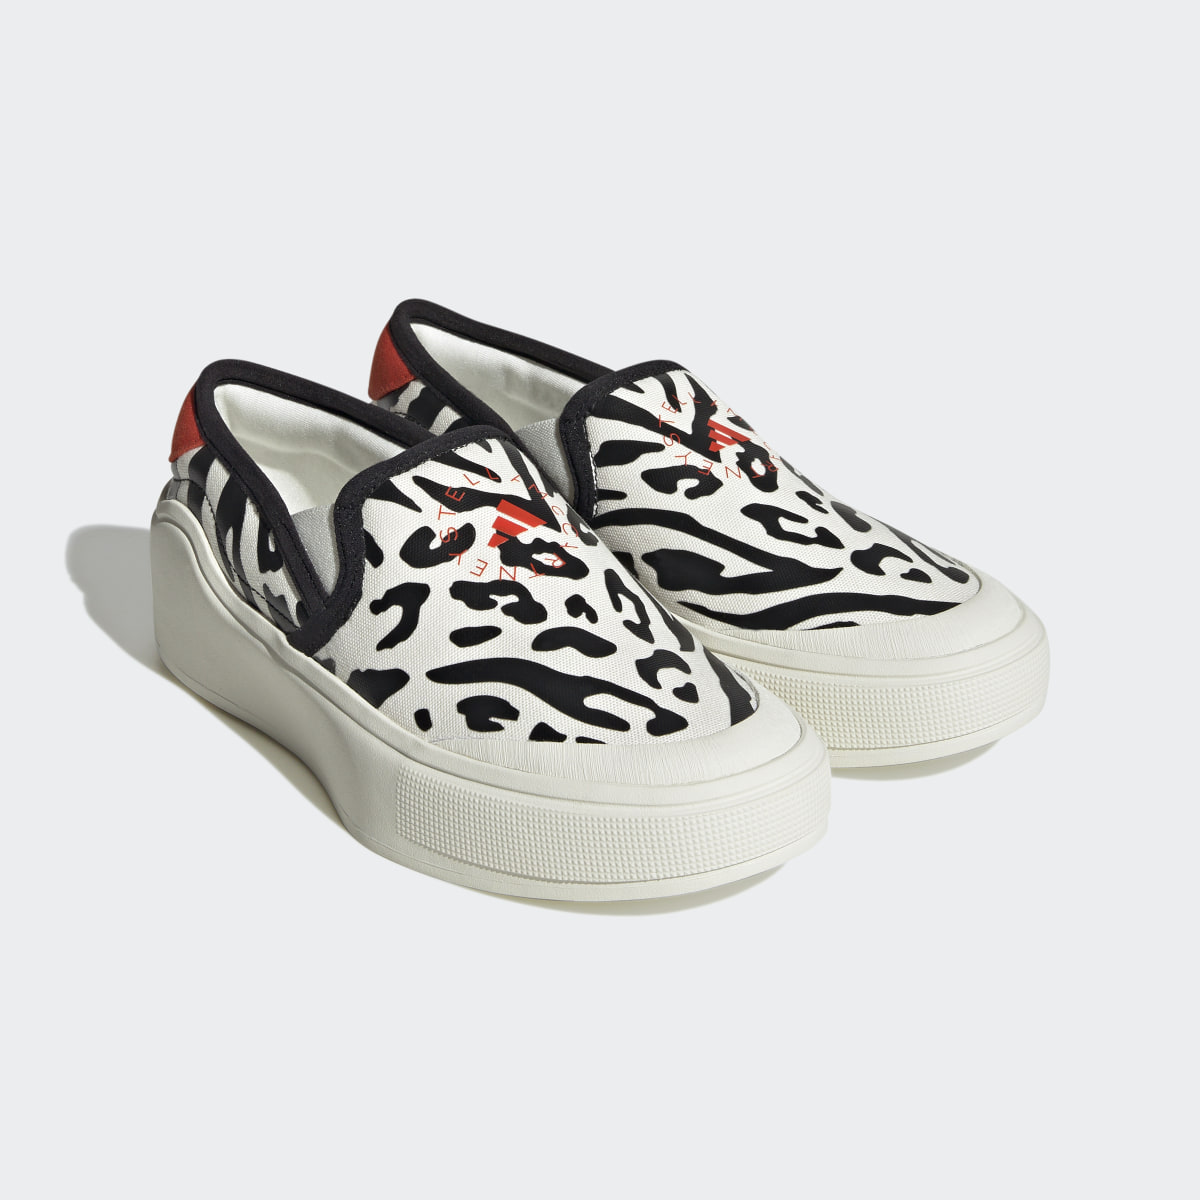 Adidas by Stella McCartney Court Slip-On Shoes. 5